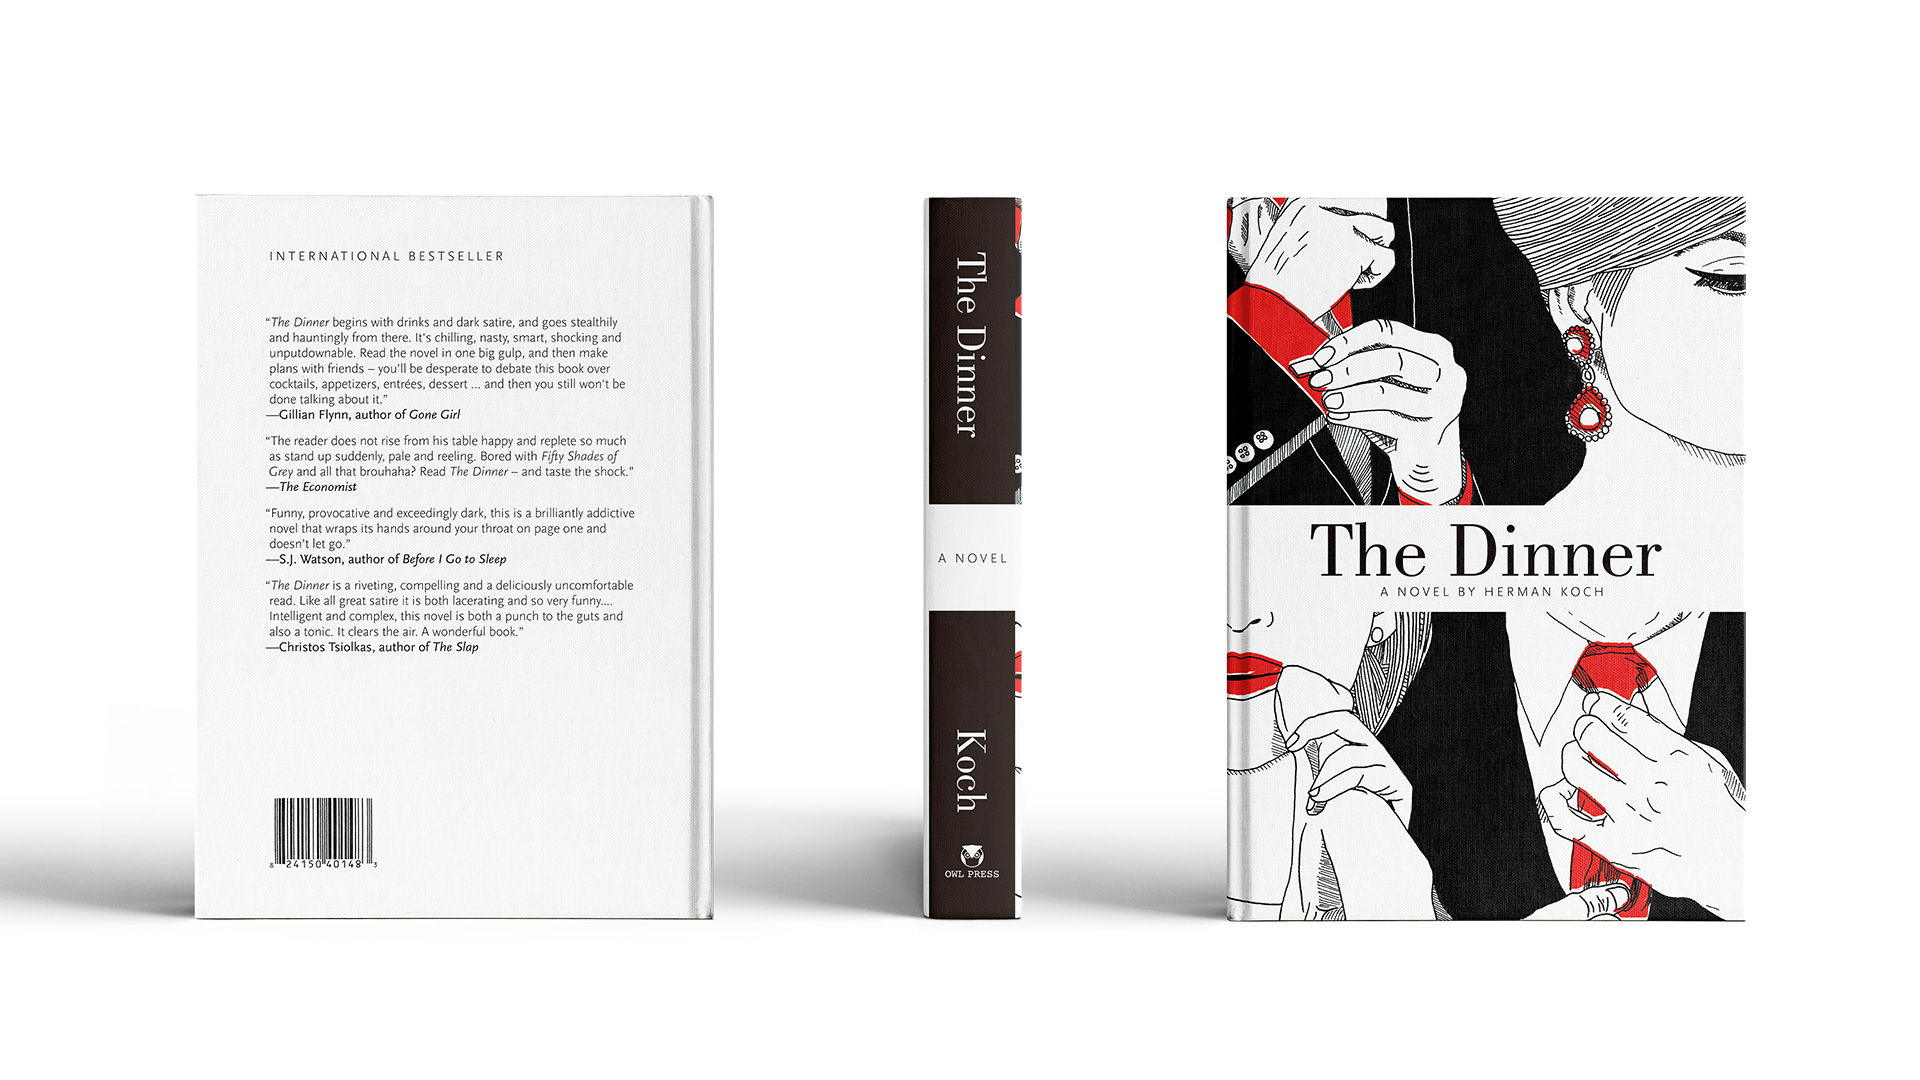 Amanda Siegmann | Design, Illustration, Print | The Dinner book jacket depicts the uncomfortable feeling in the novel